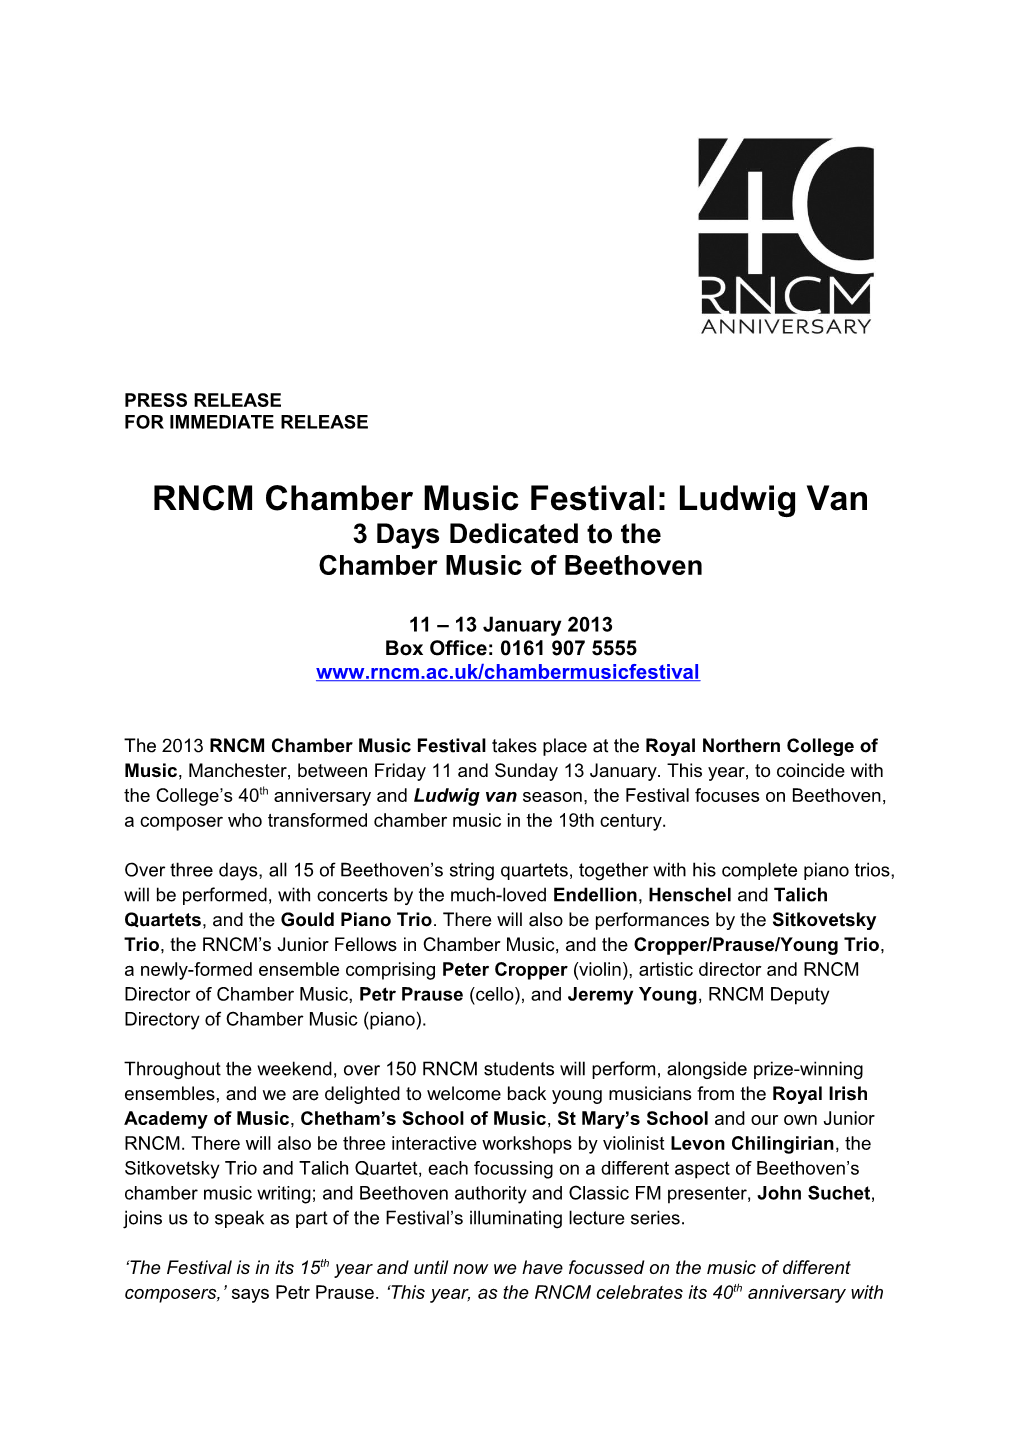 RNCM Chamber Music Festival: Ludwig Van